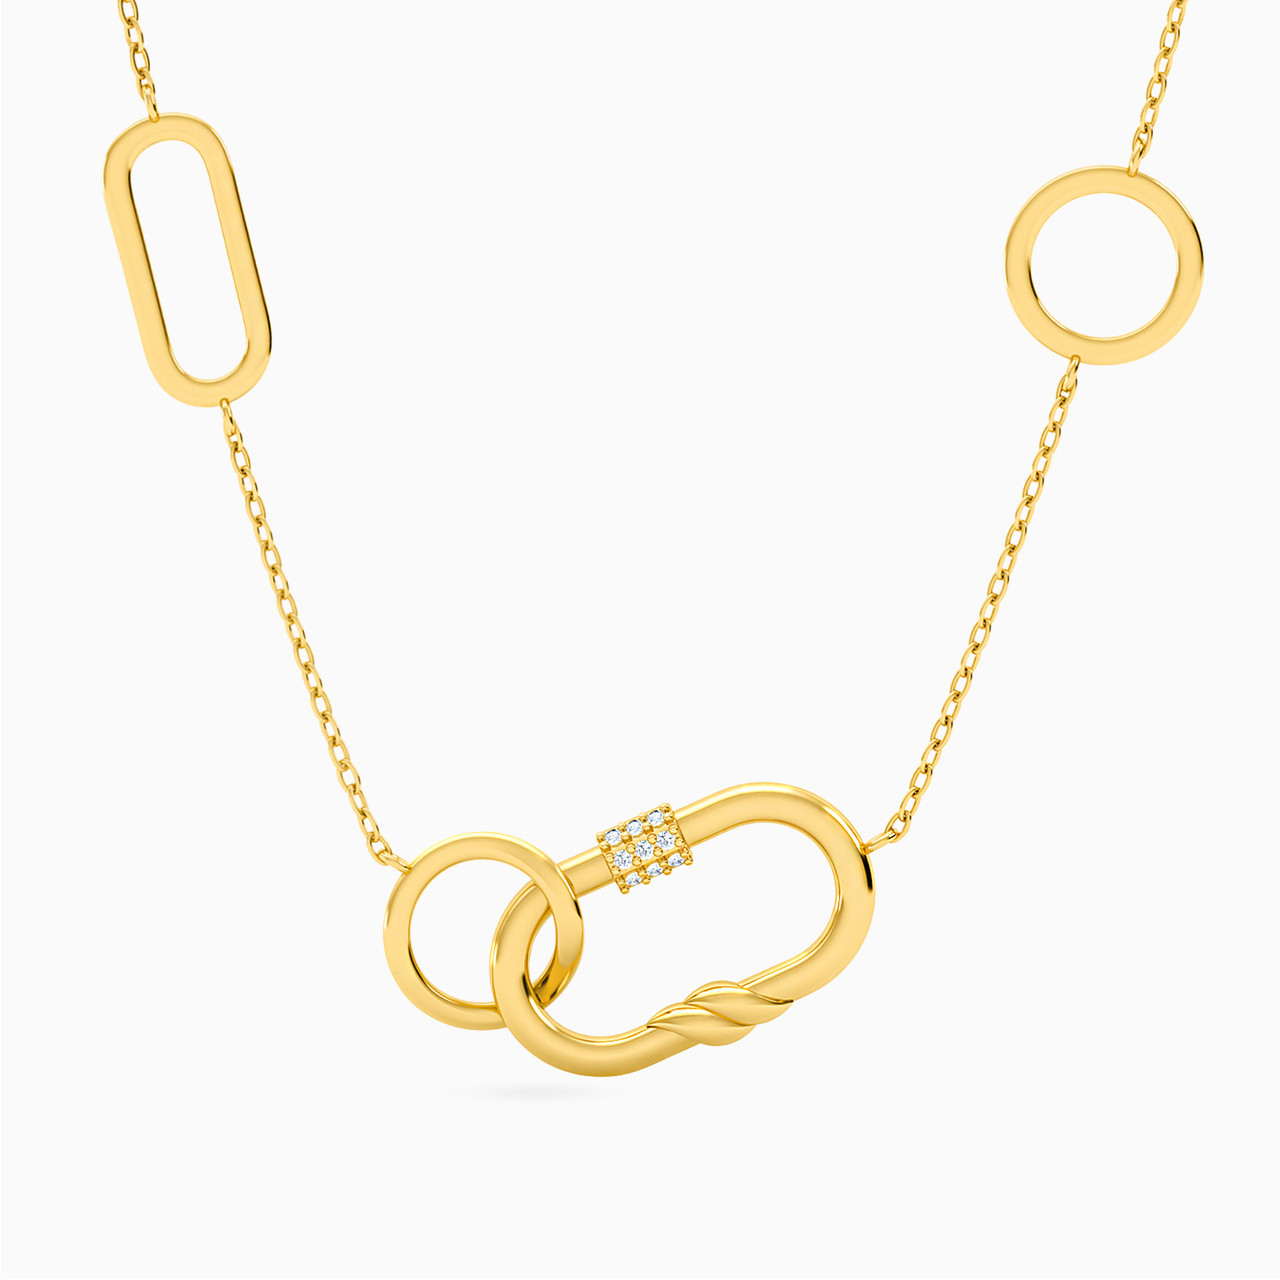 18K Gold Diamond Chain Necklace